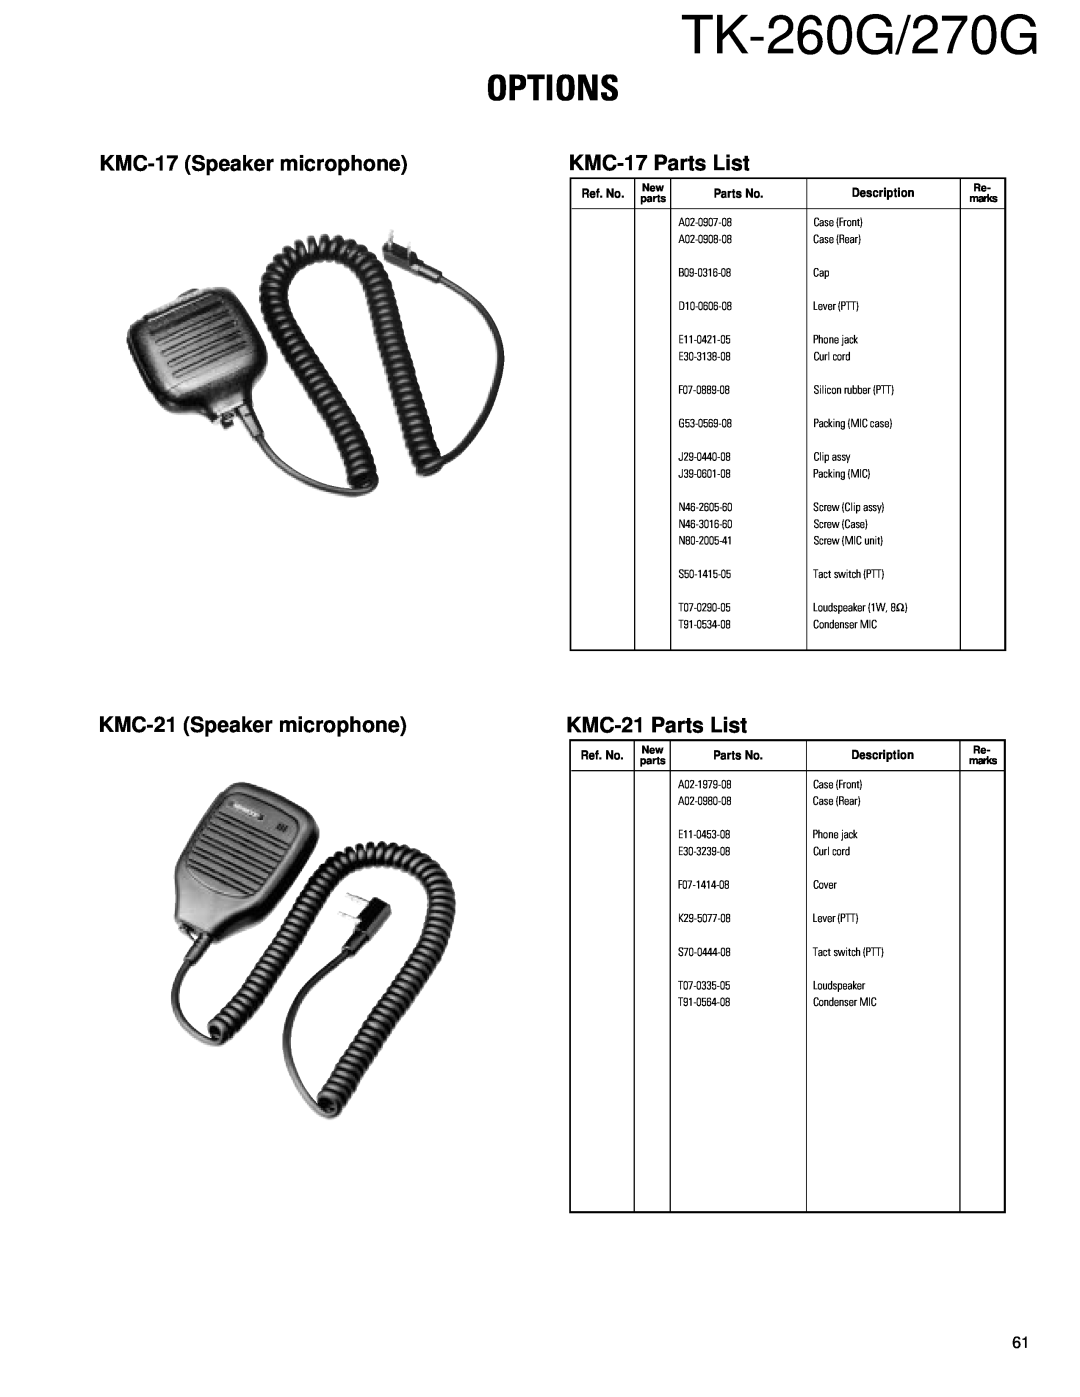 Kenwood TK-260G, TK-270G Options, KMC-17Speaker microphone, KMC-17Parts List, KMC-21Speaker microphone, KMC-21Parts List 